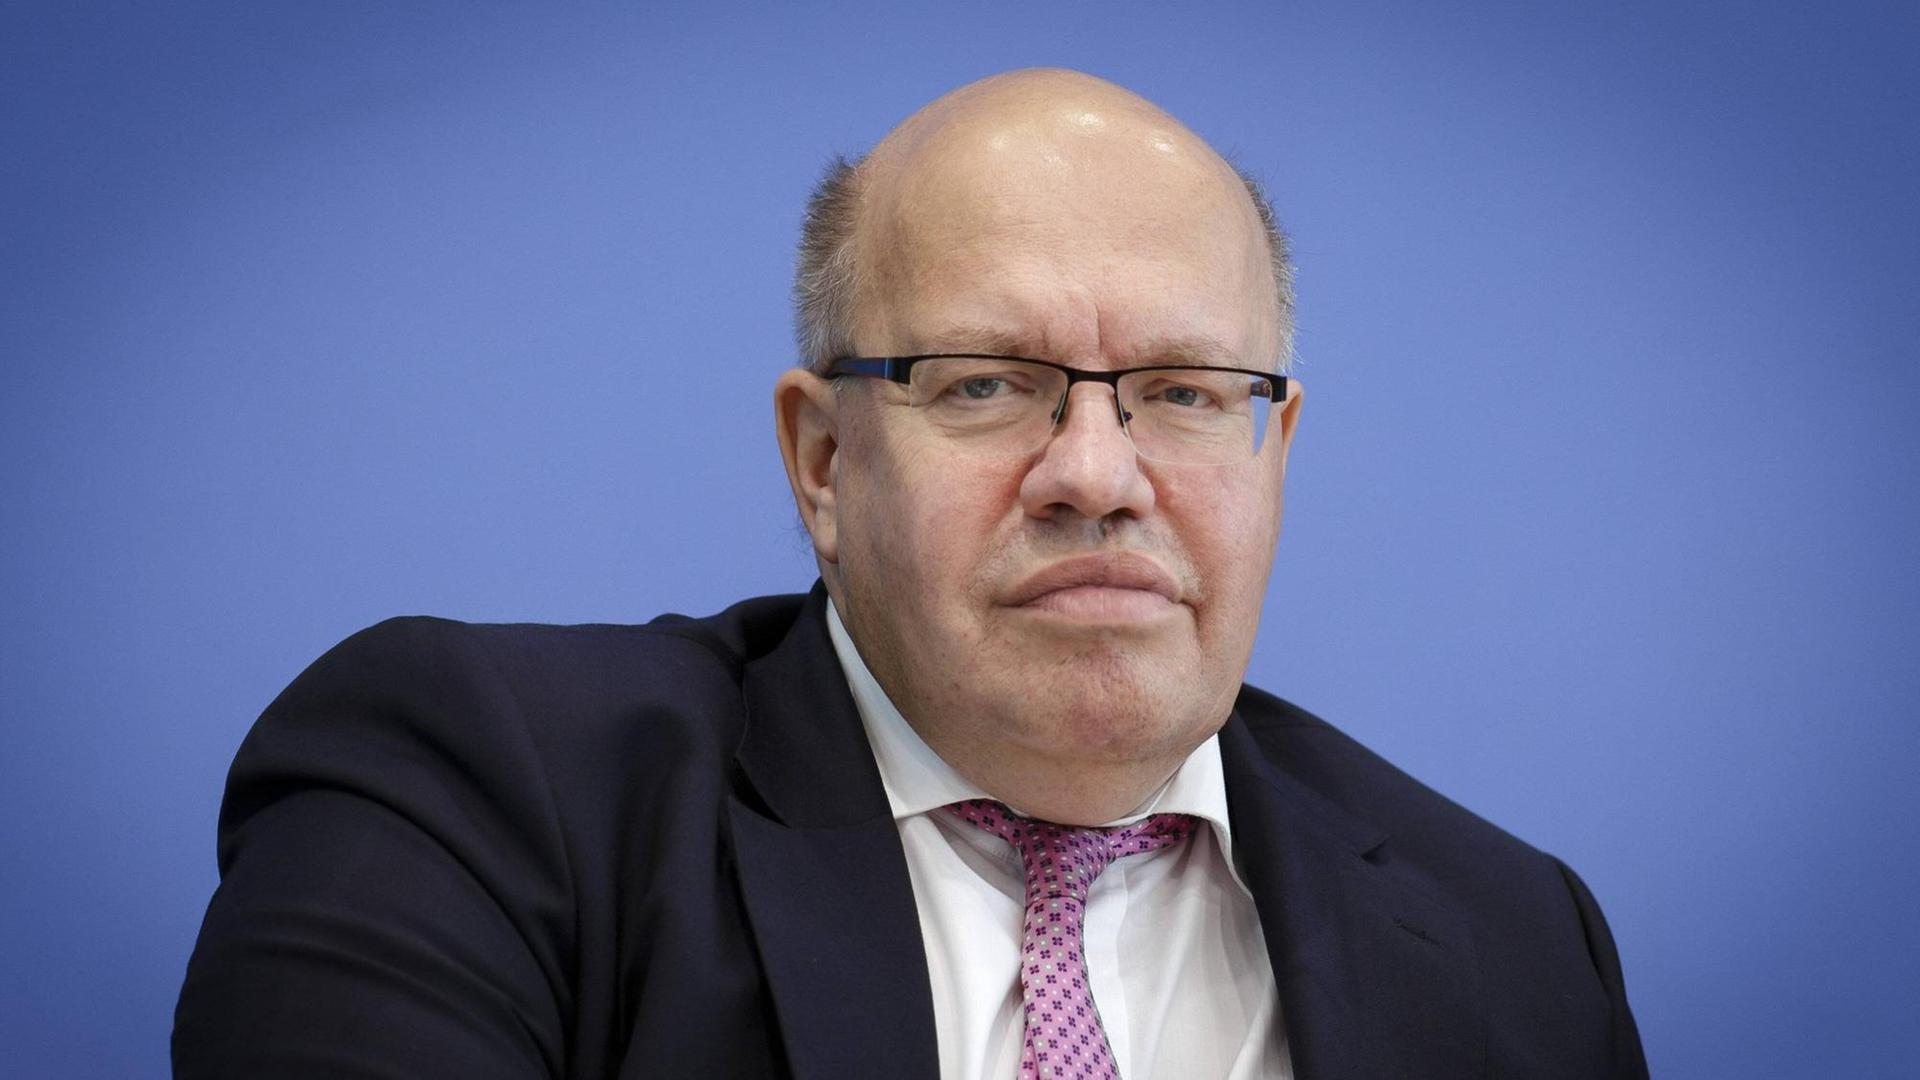 Bundeswirtschaftsminister Peter Altmaier, CDU